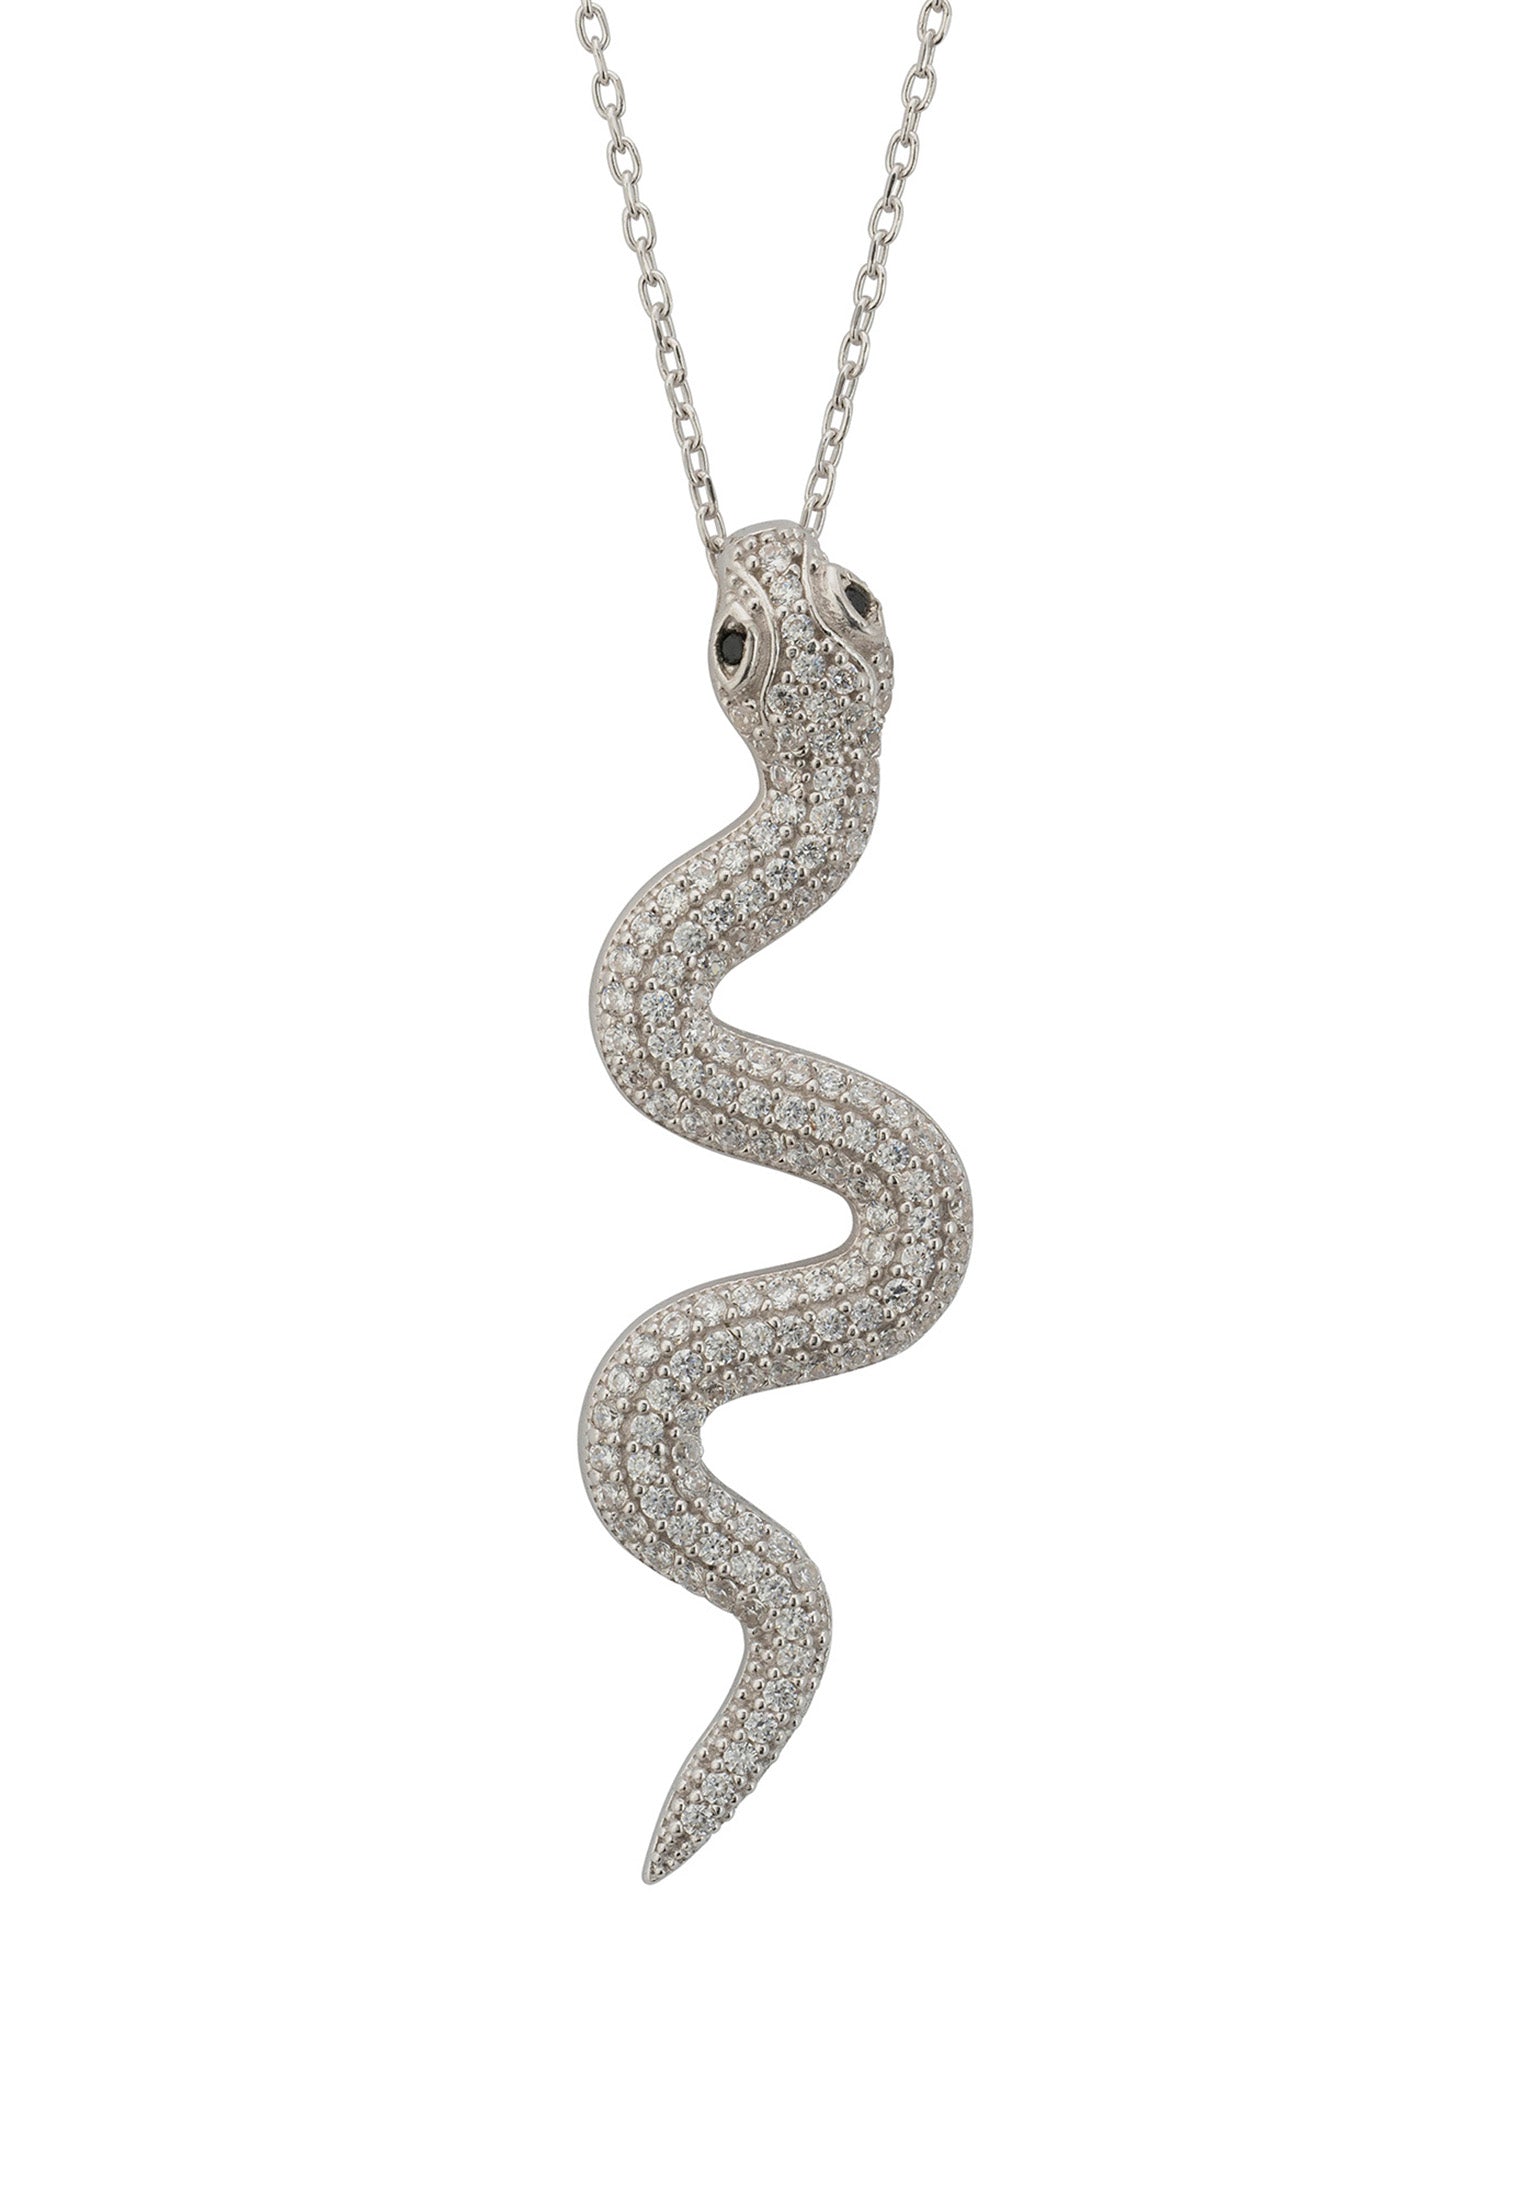 Medusa Snake Pendant Necklace Silver White CZ